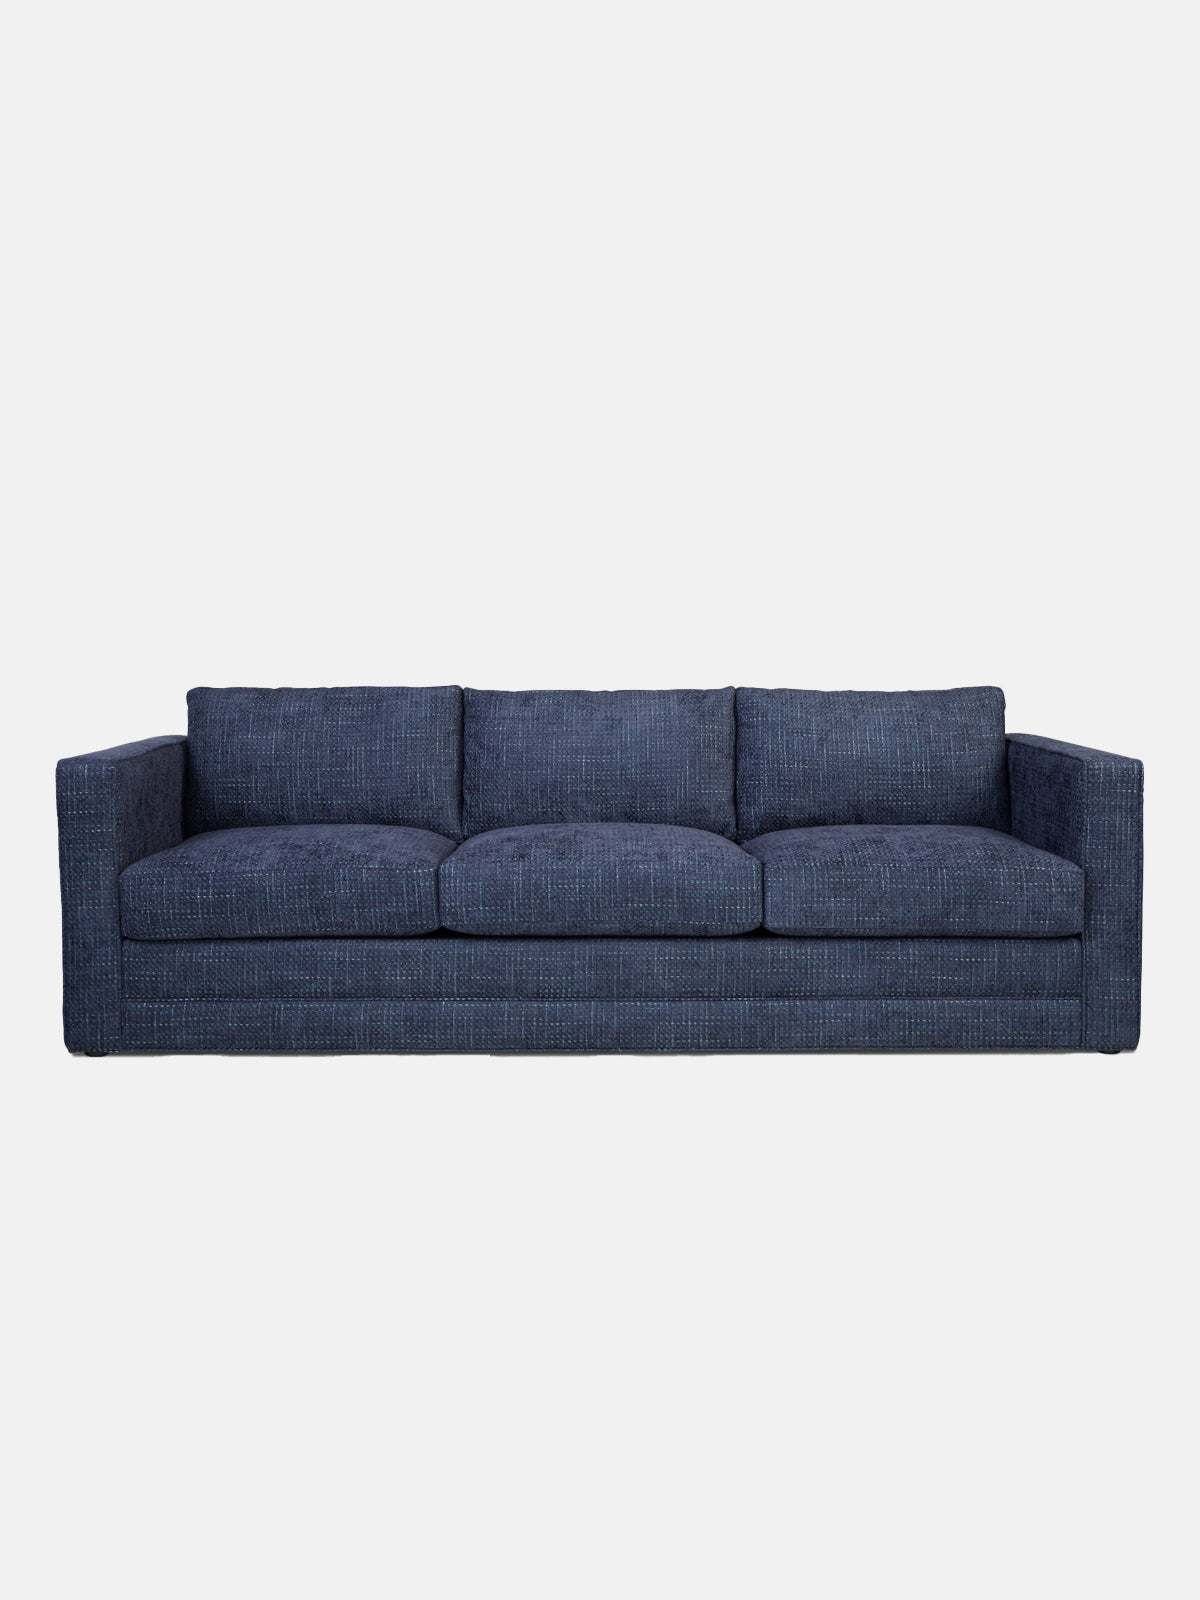 The Proper Sofa